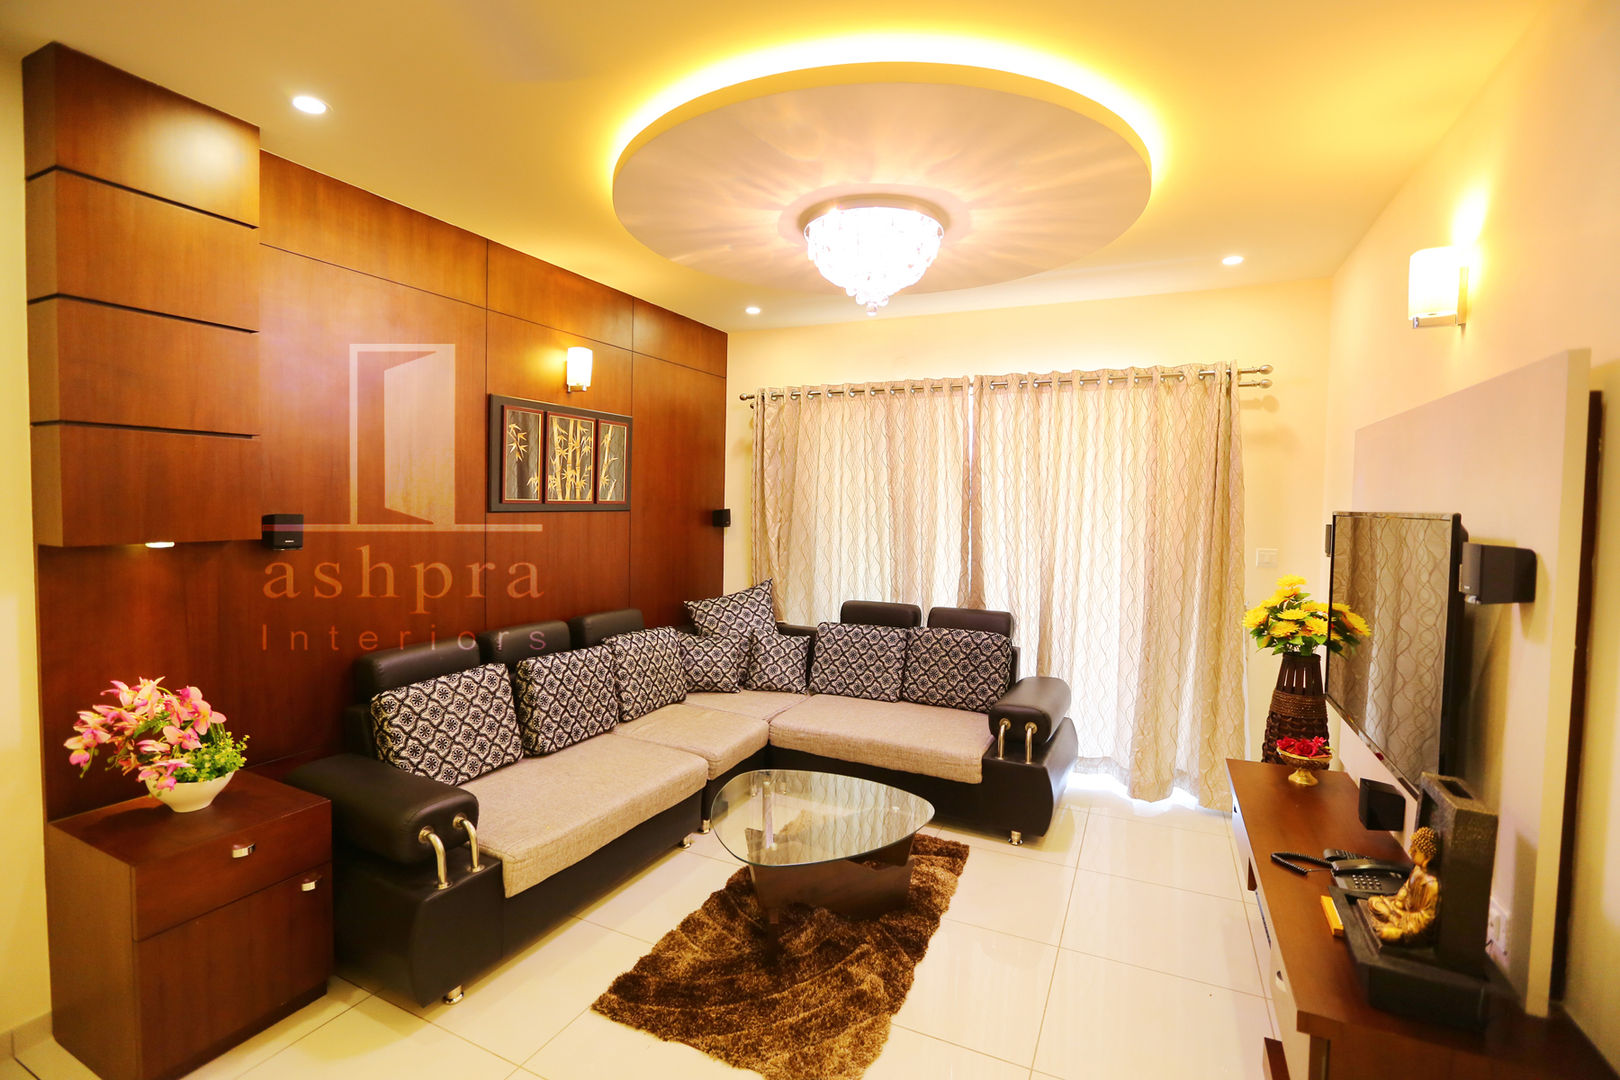 Interior work for a 2 bedroom apartment @ Mangalore.., Ashpra interiors Ashpra interiors 아시아스타일 거실 소파 & 안락 의자